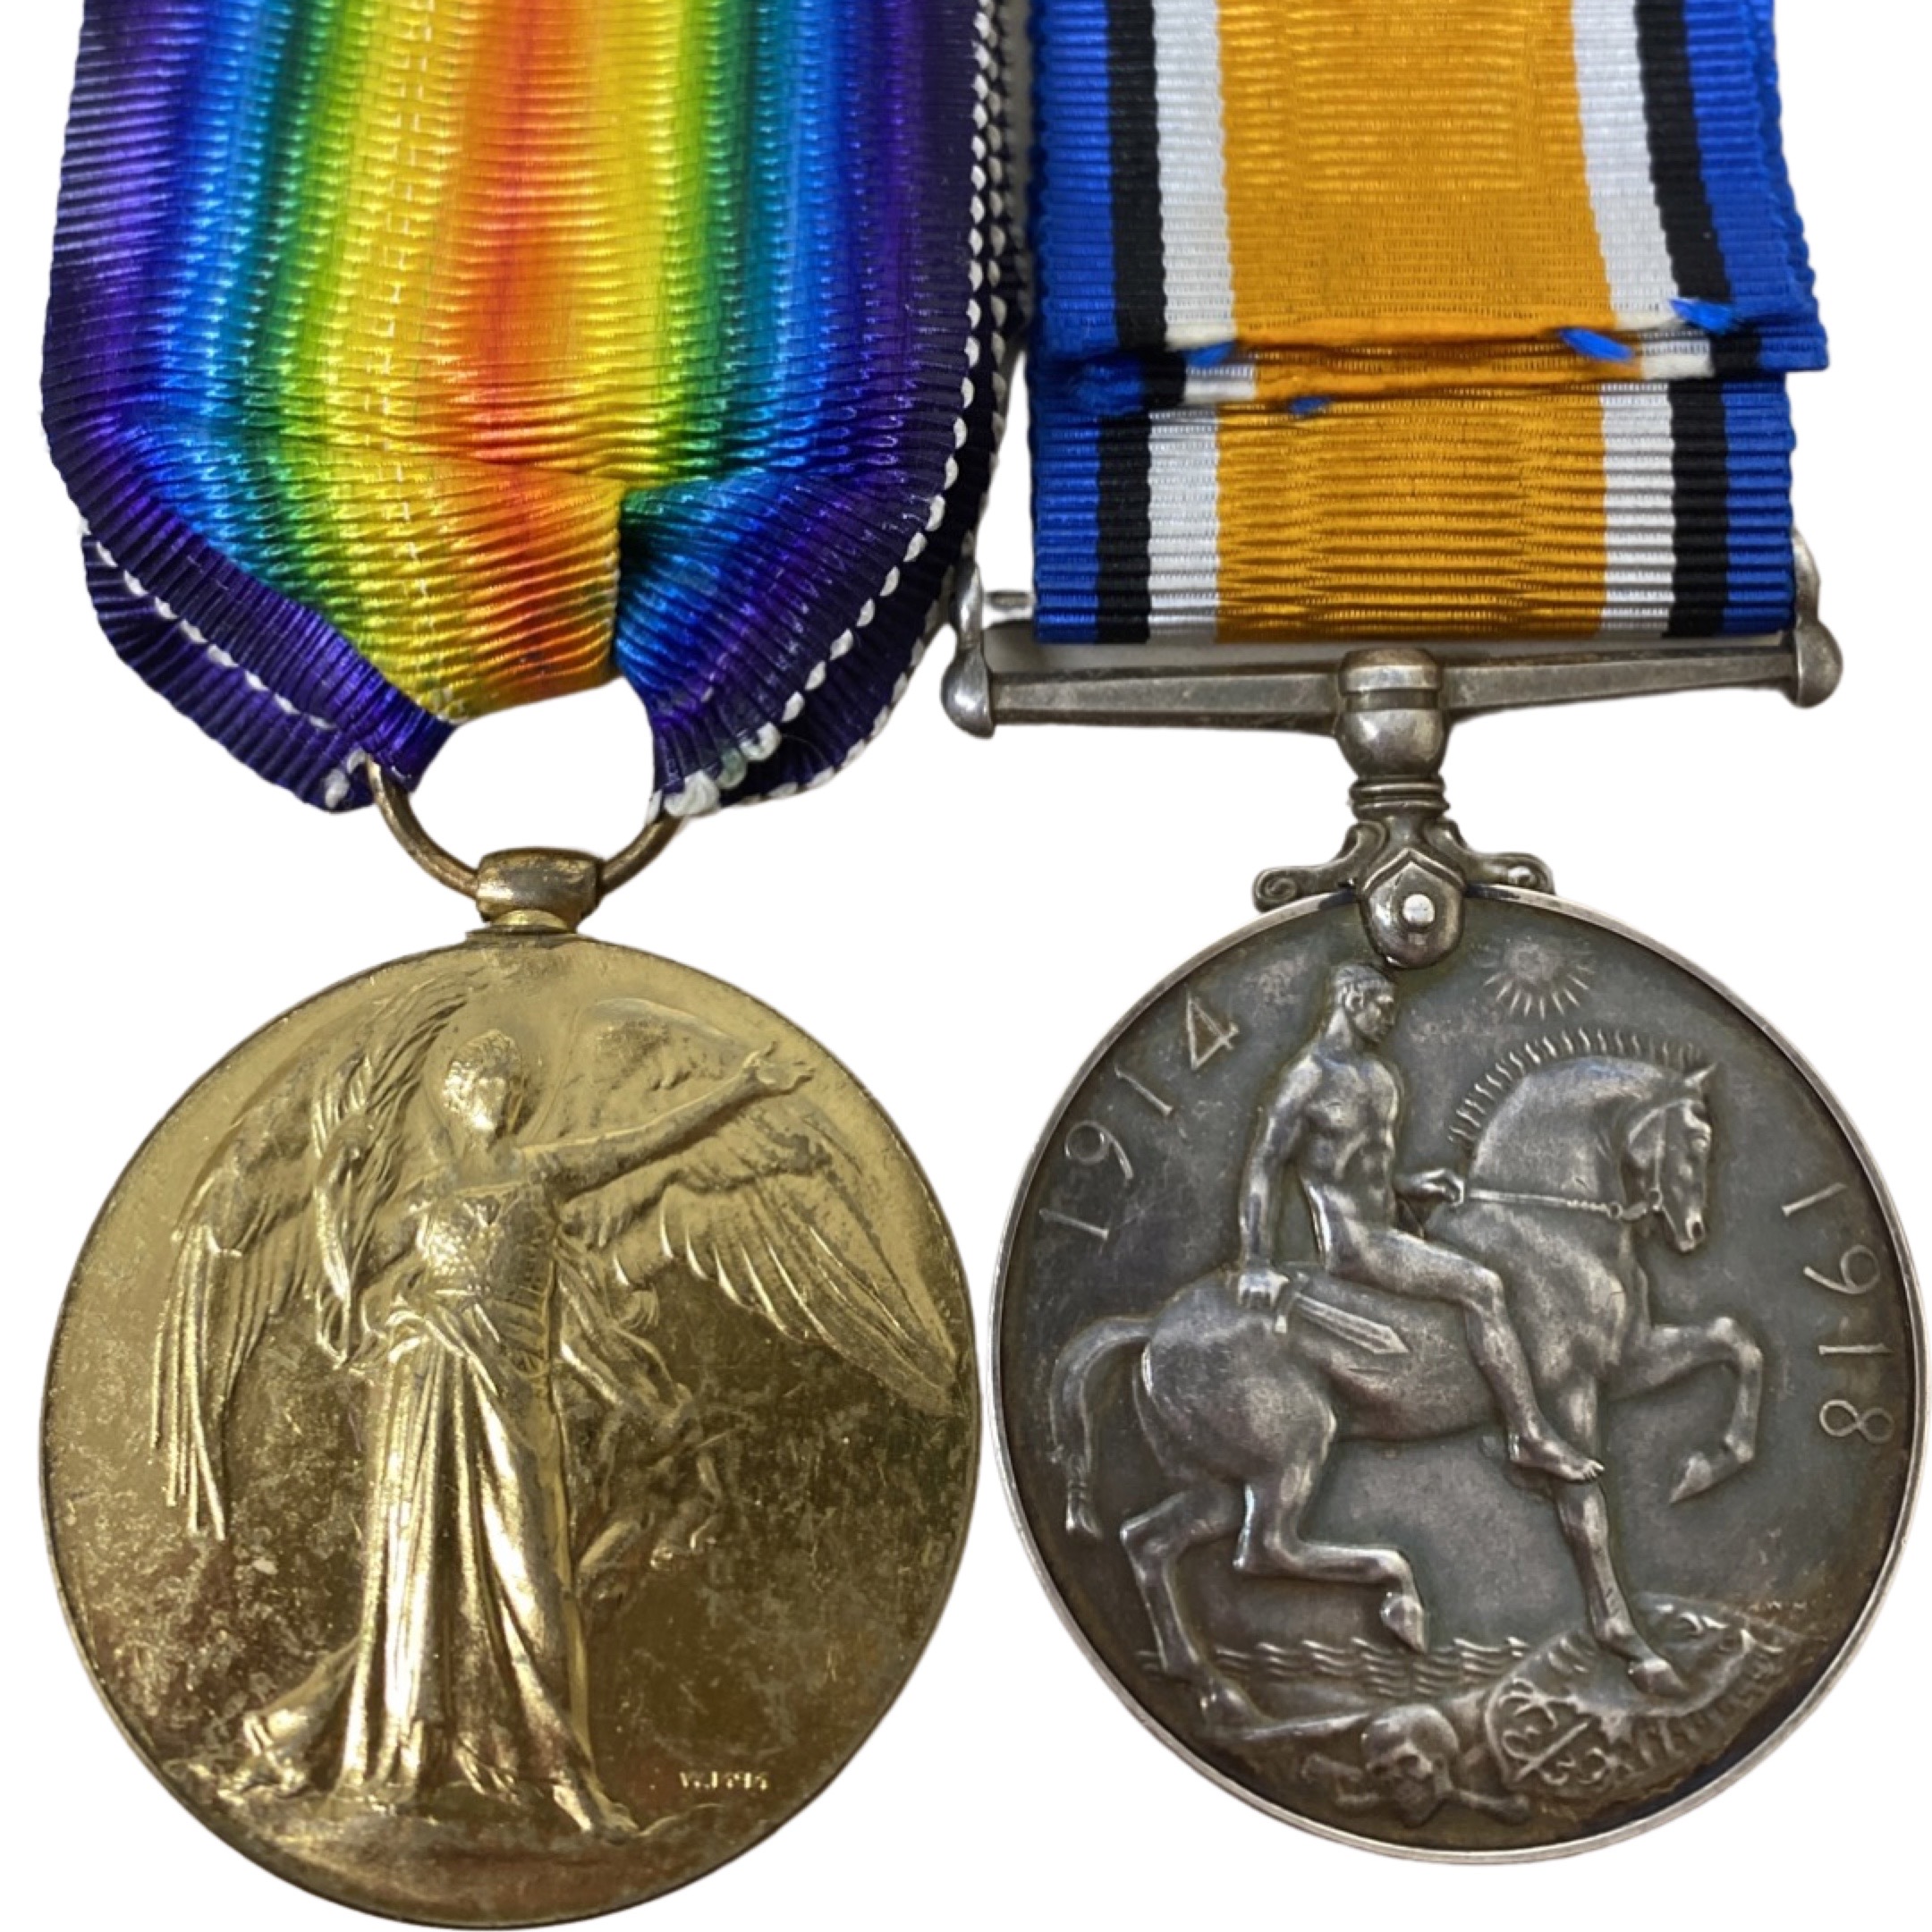 Militaria, Medals, Coins and Train Memorabilia